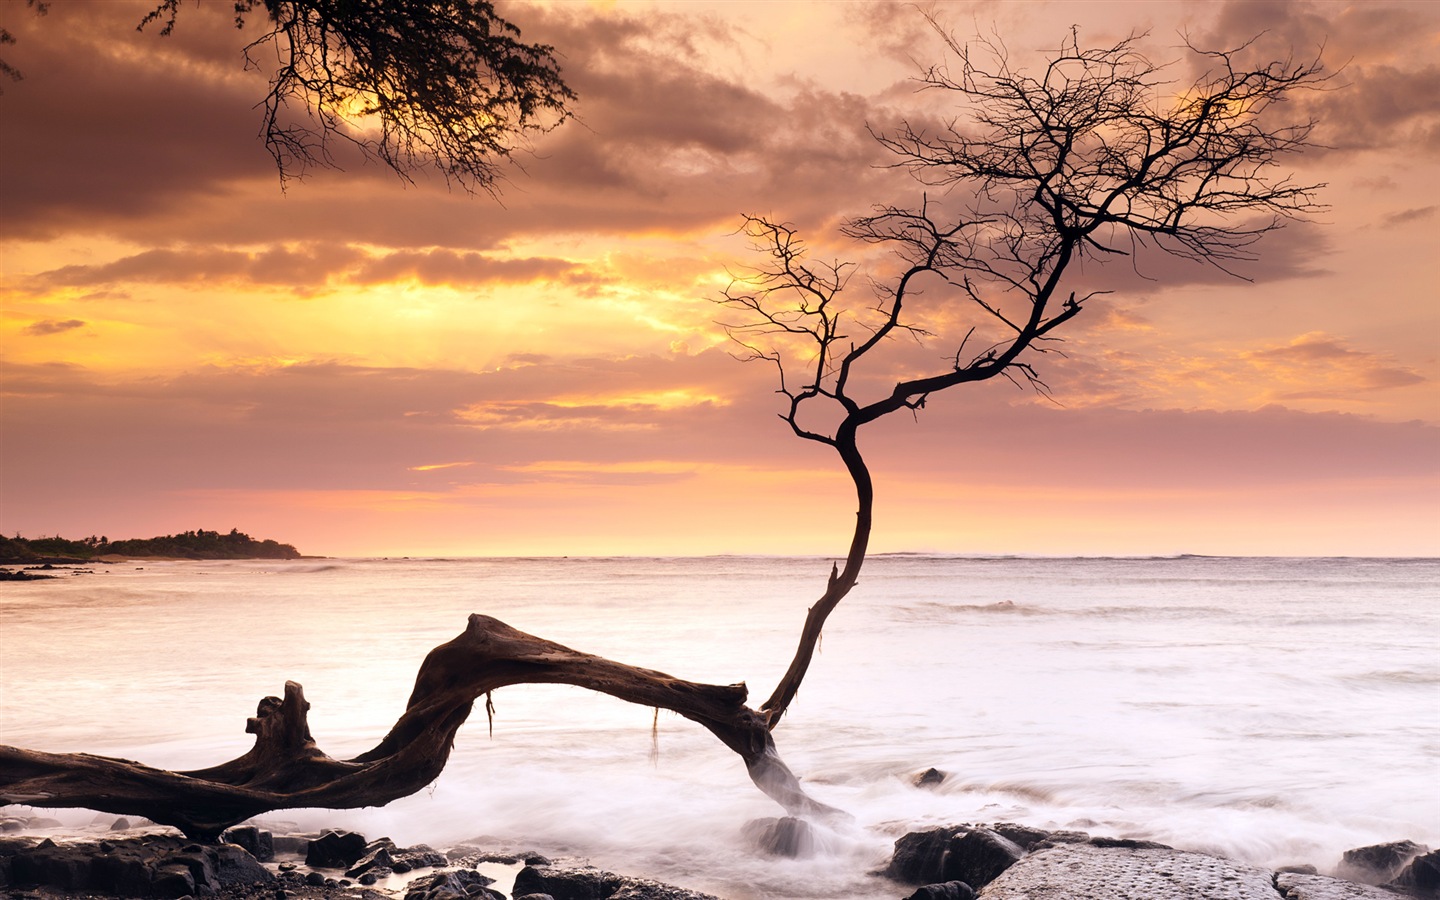 Windows 8 theme wallpaper: Beach sunrise and sunset views #5 - 1440x900